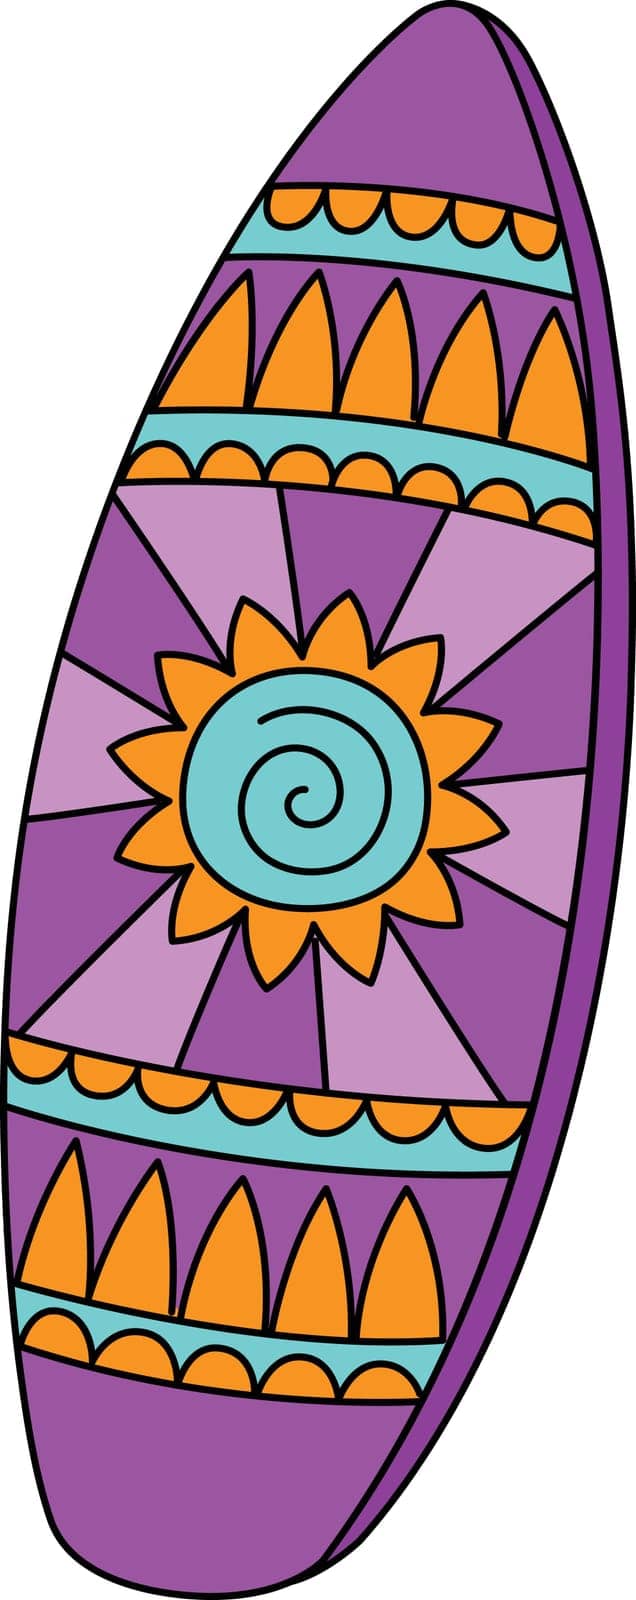 This cartoon clipart shows a Surfboard Summer illustration.